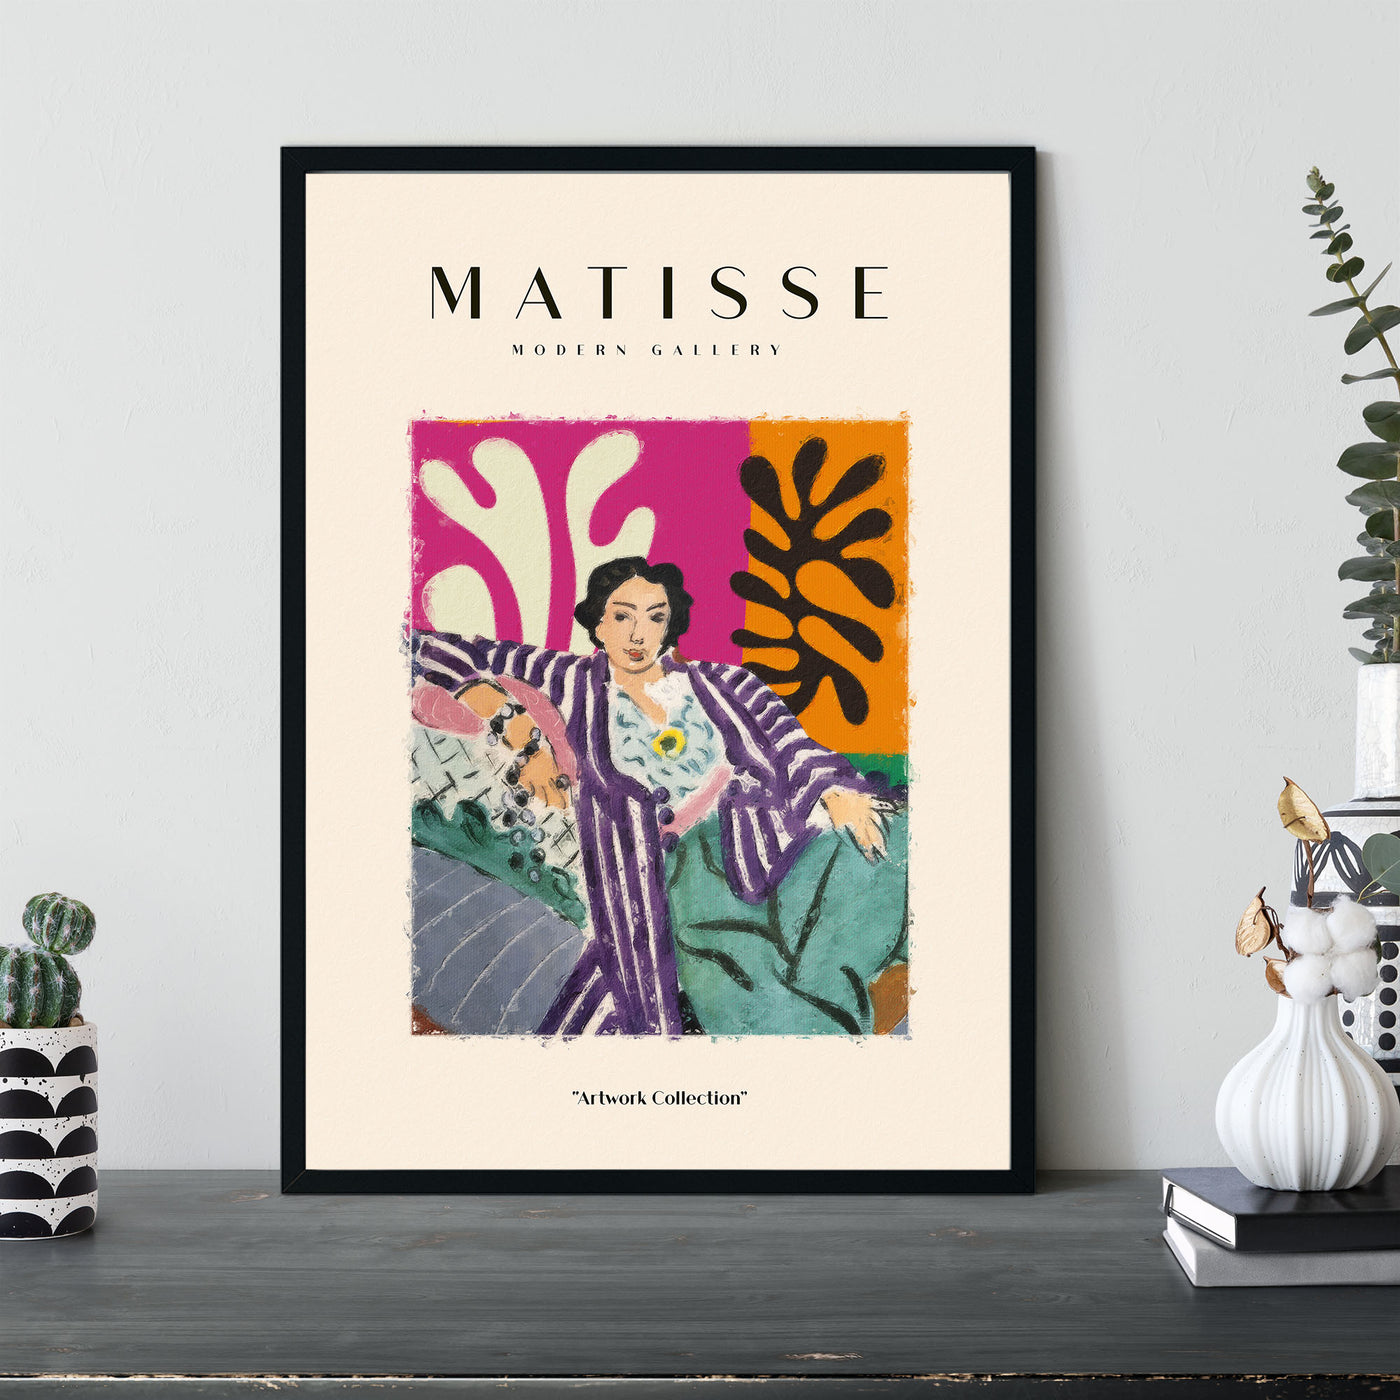 Henri Matisse - #59